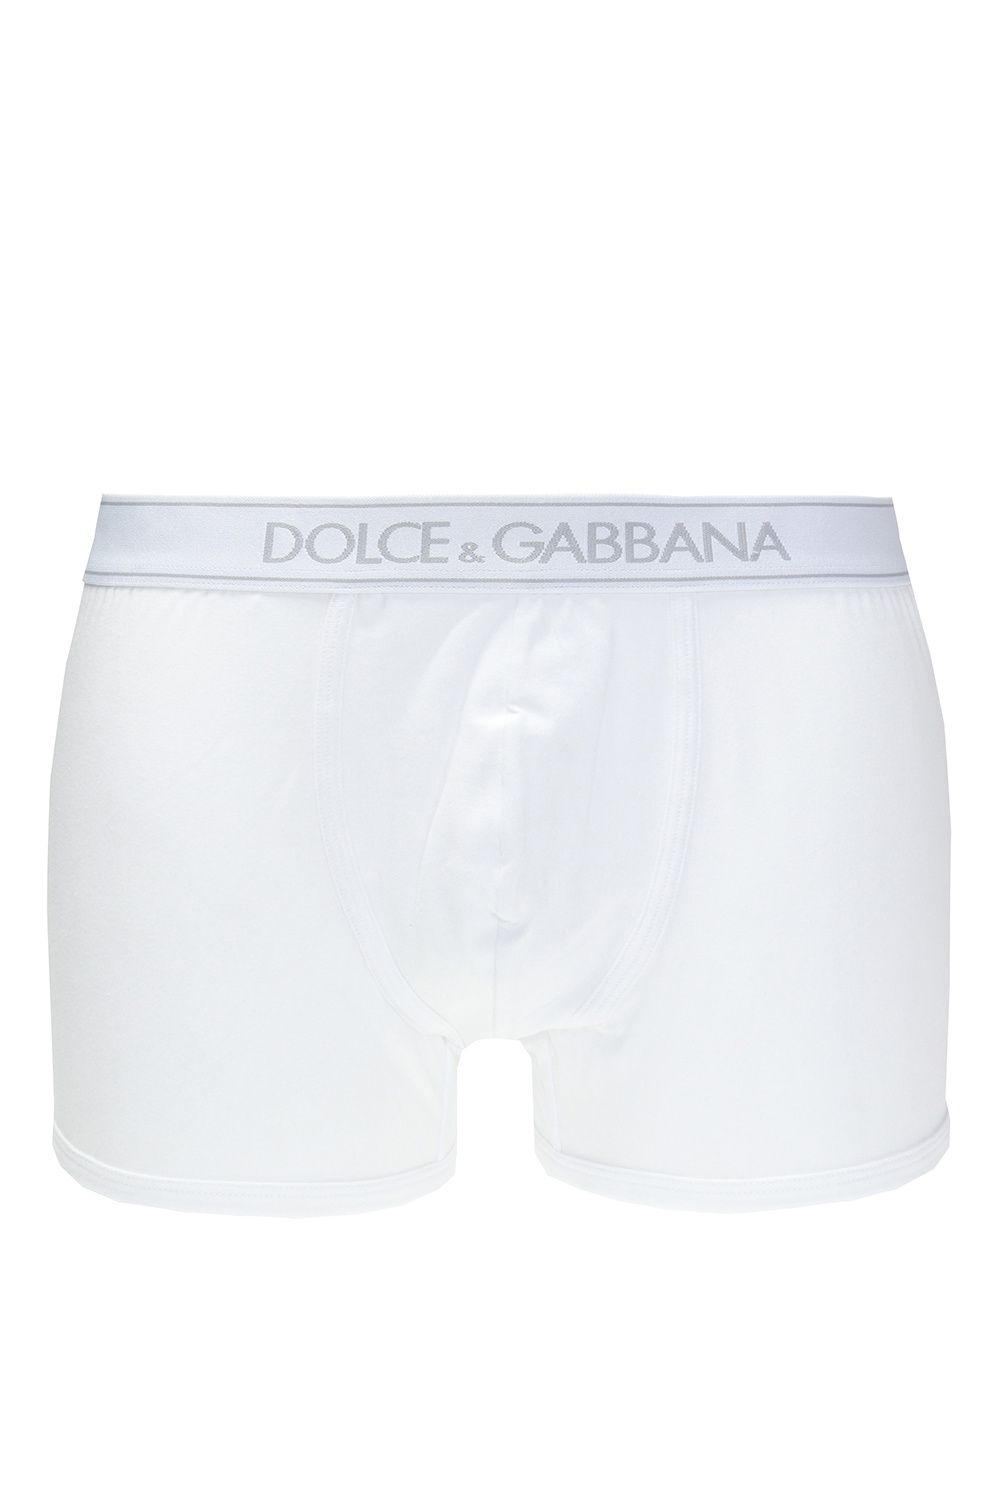 dolce gabbana underwear size chart